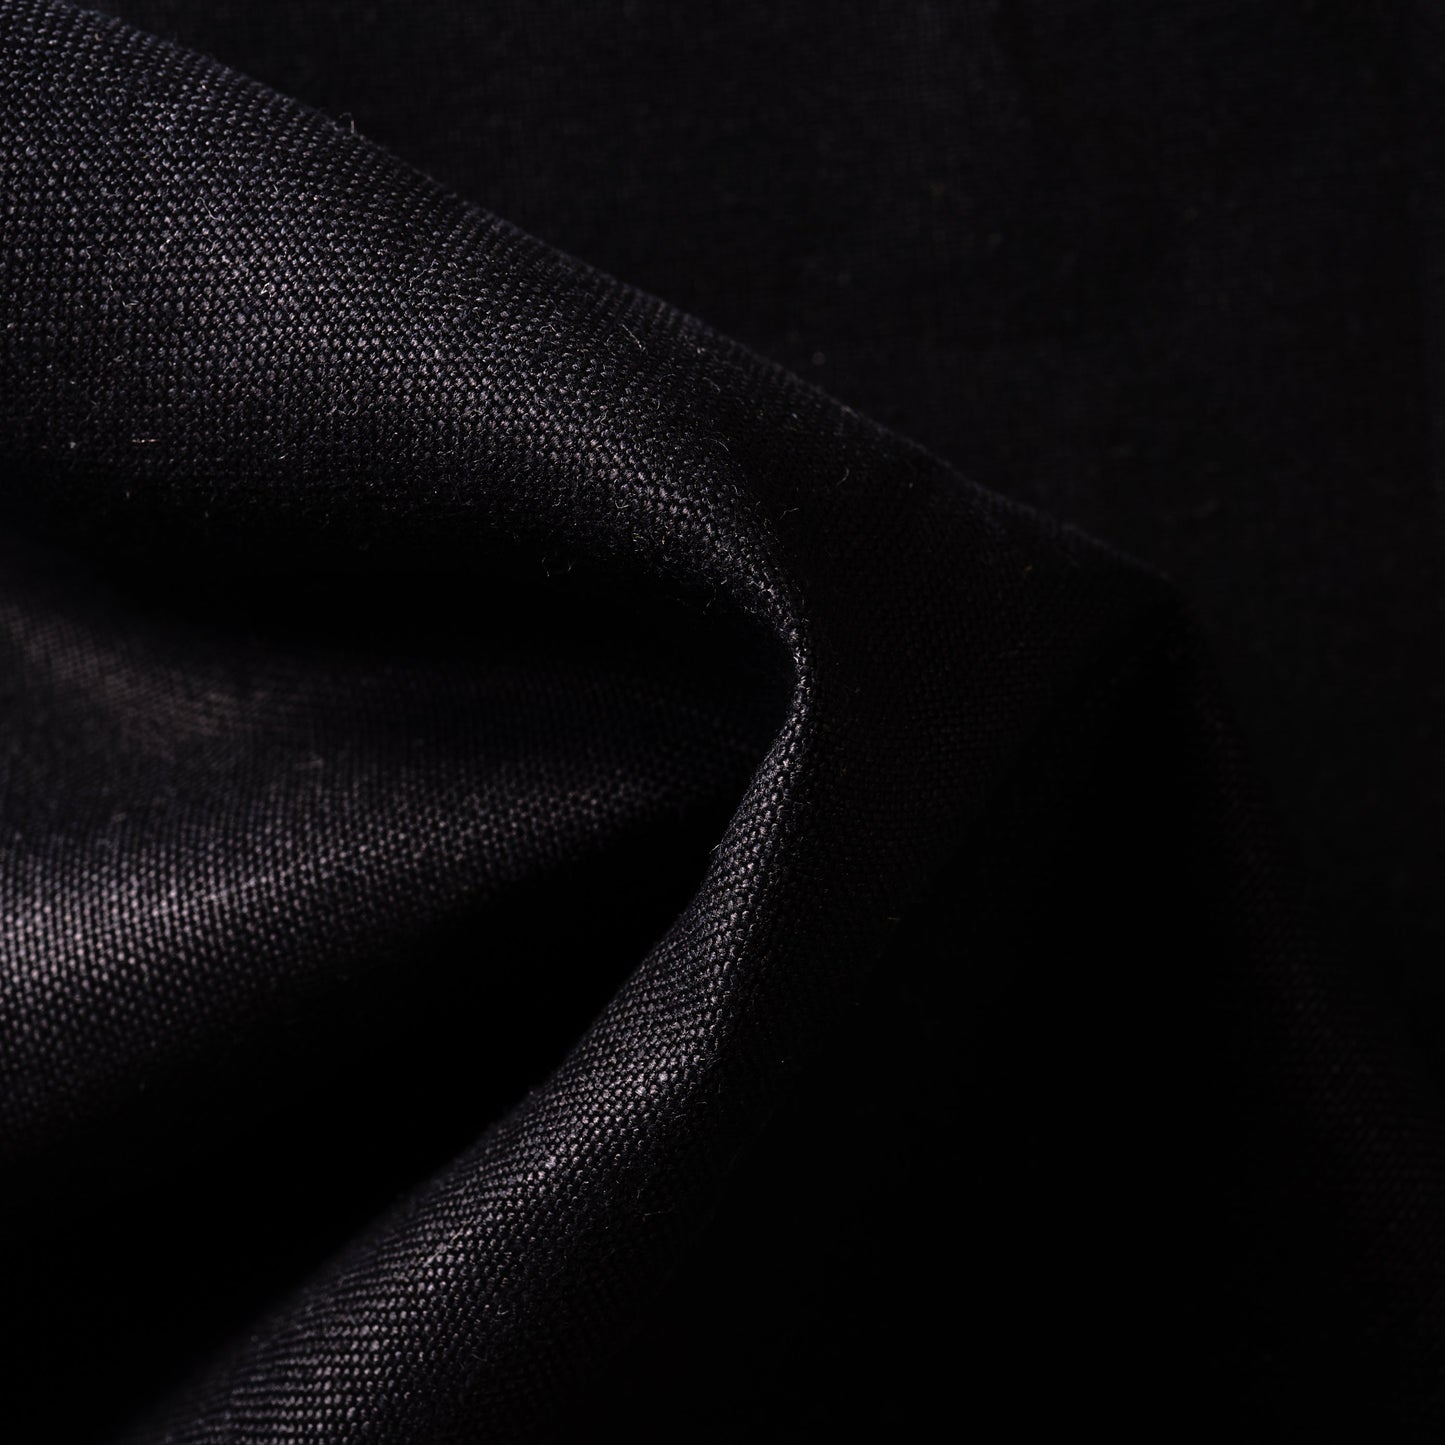 12 oz/sq yard 100% Upholstery/ Slipcover Weight Linen Black